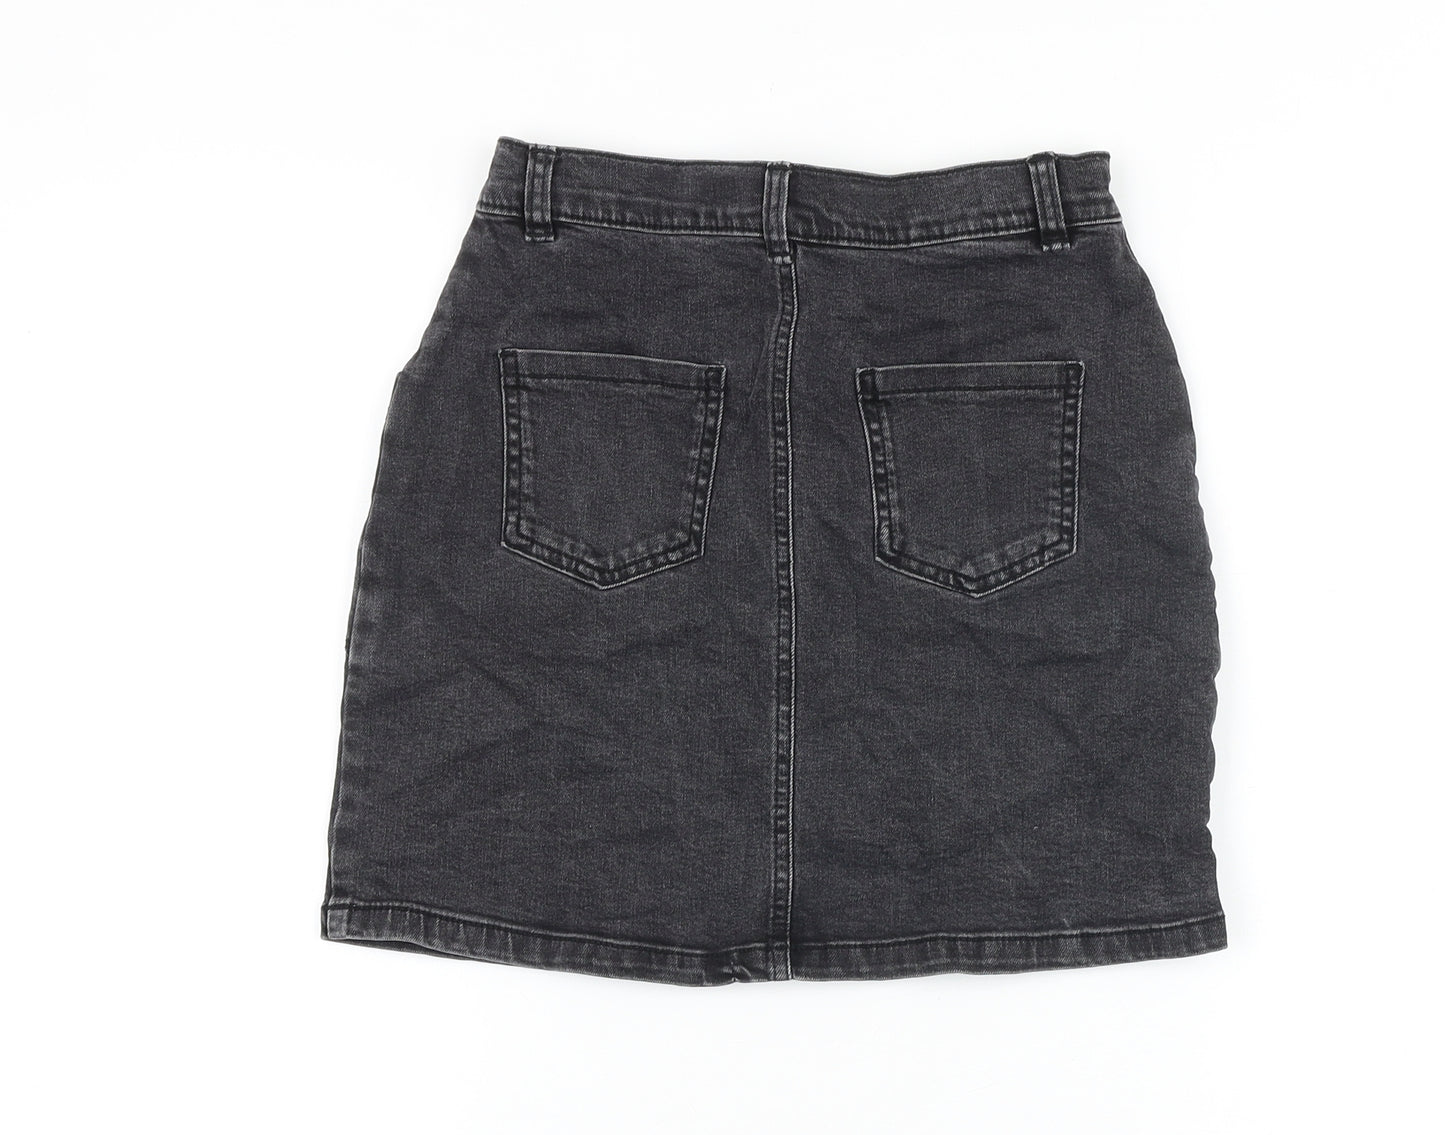 Nutmeg Girls Black Cotton Straight & Pencil Skirt Size 11-12 Years Regular Zip